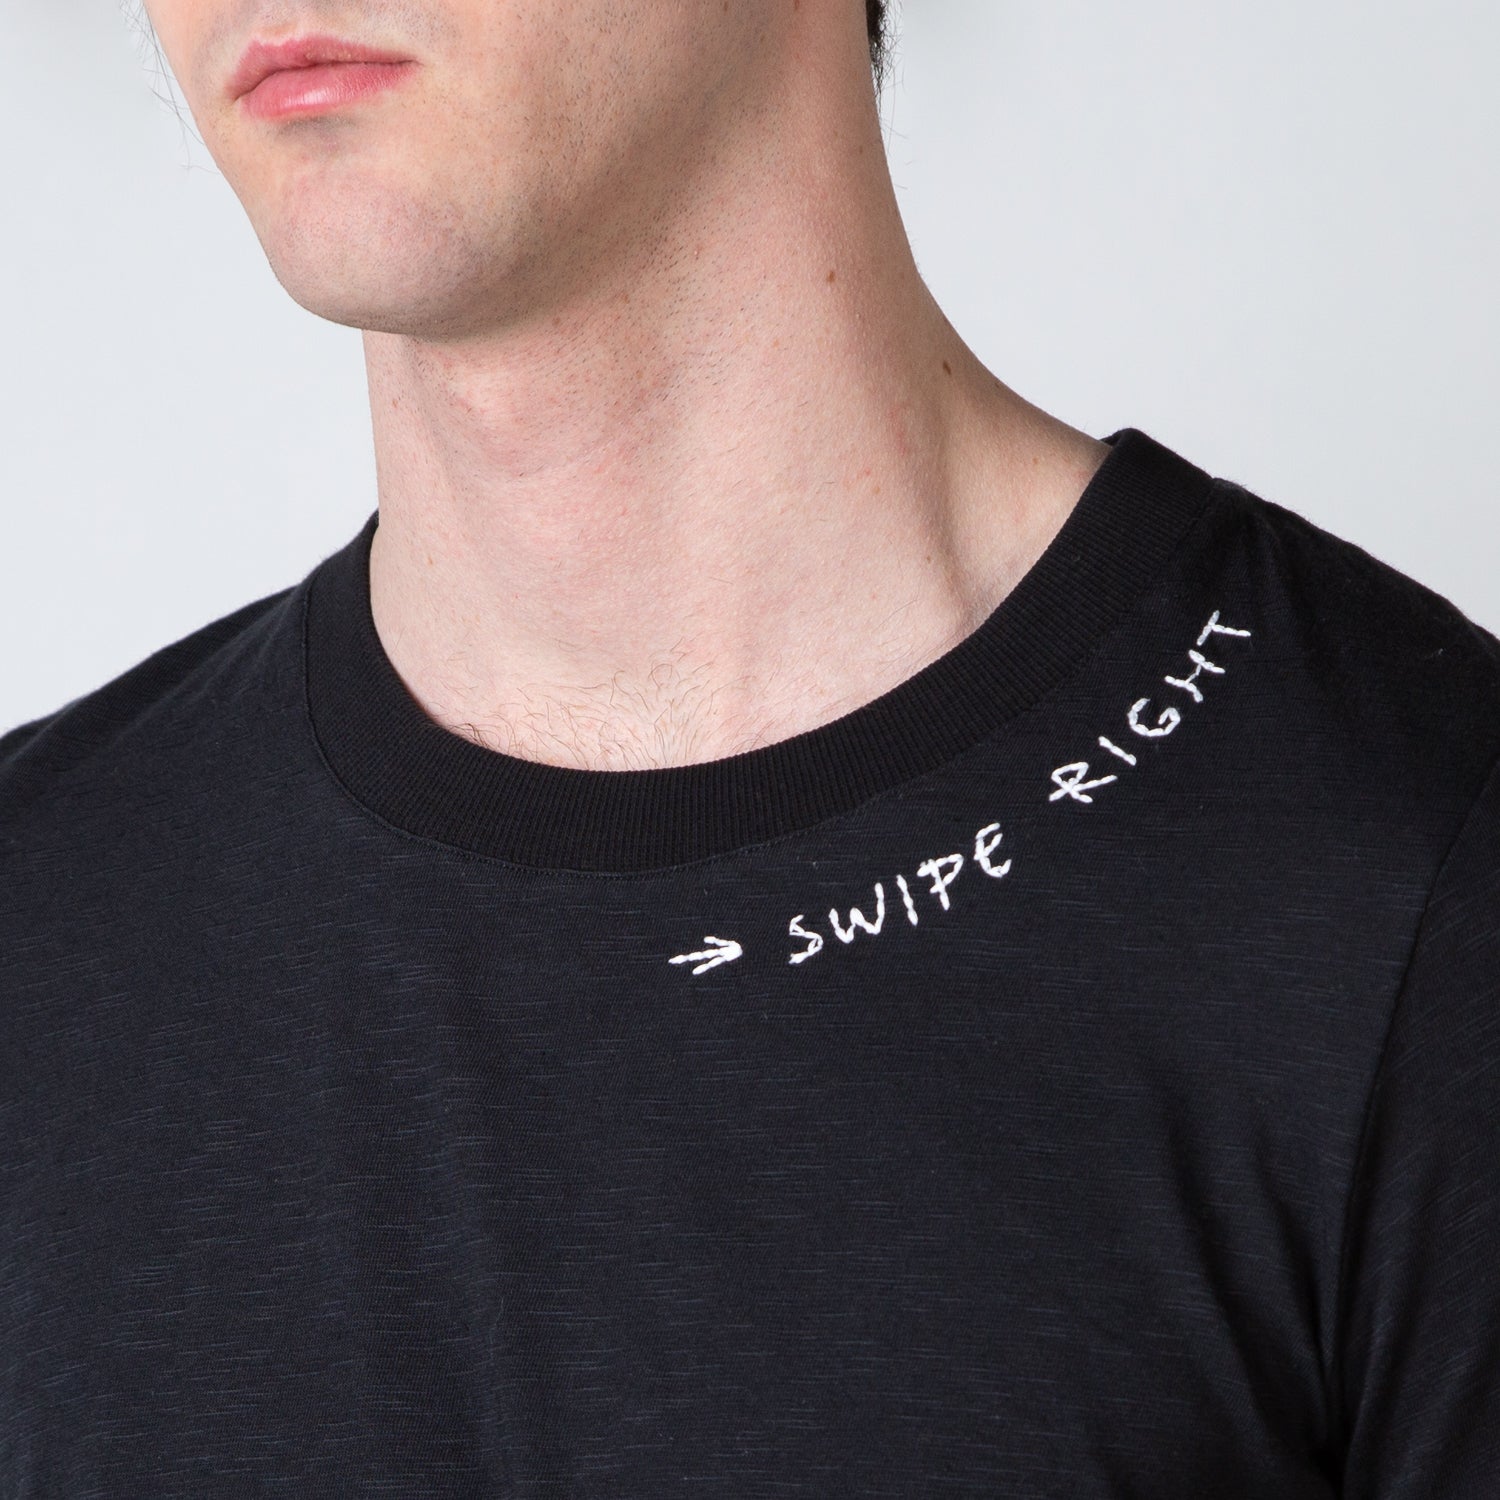 Swipe Right T-shirt, black - Secret Location